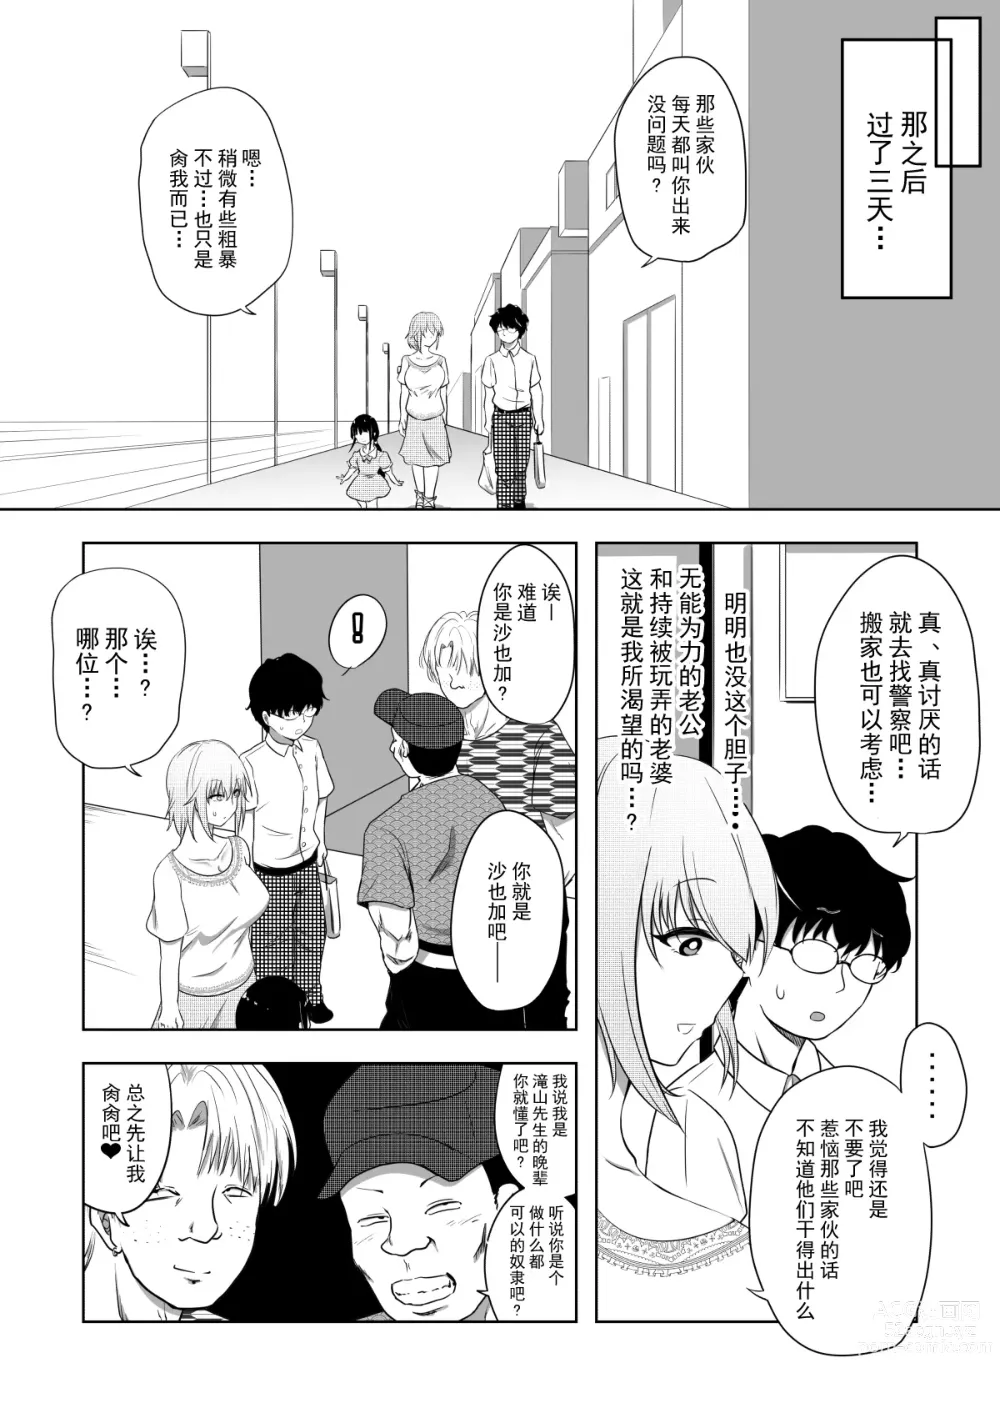 Page 23 of doujinshi 老婆的愿望名为毁灭